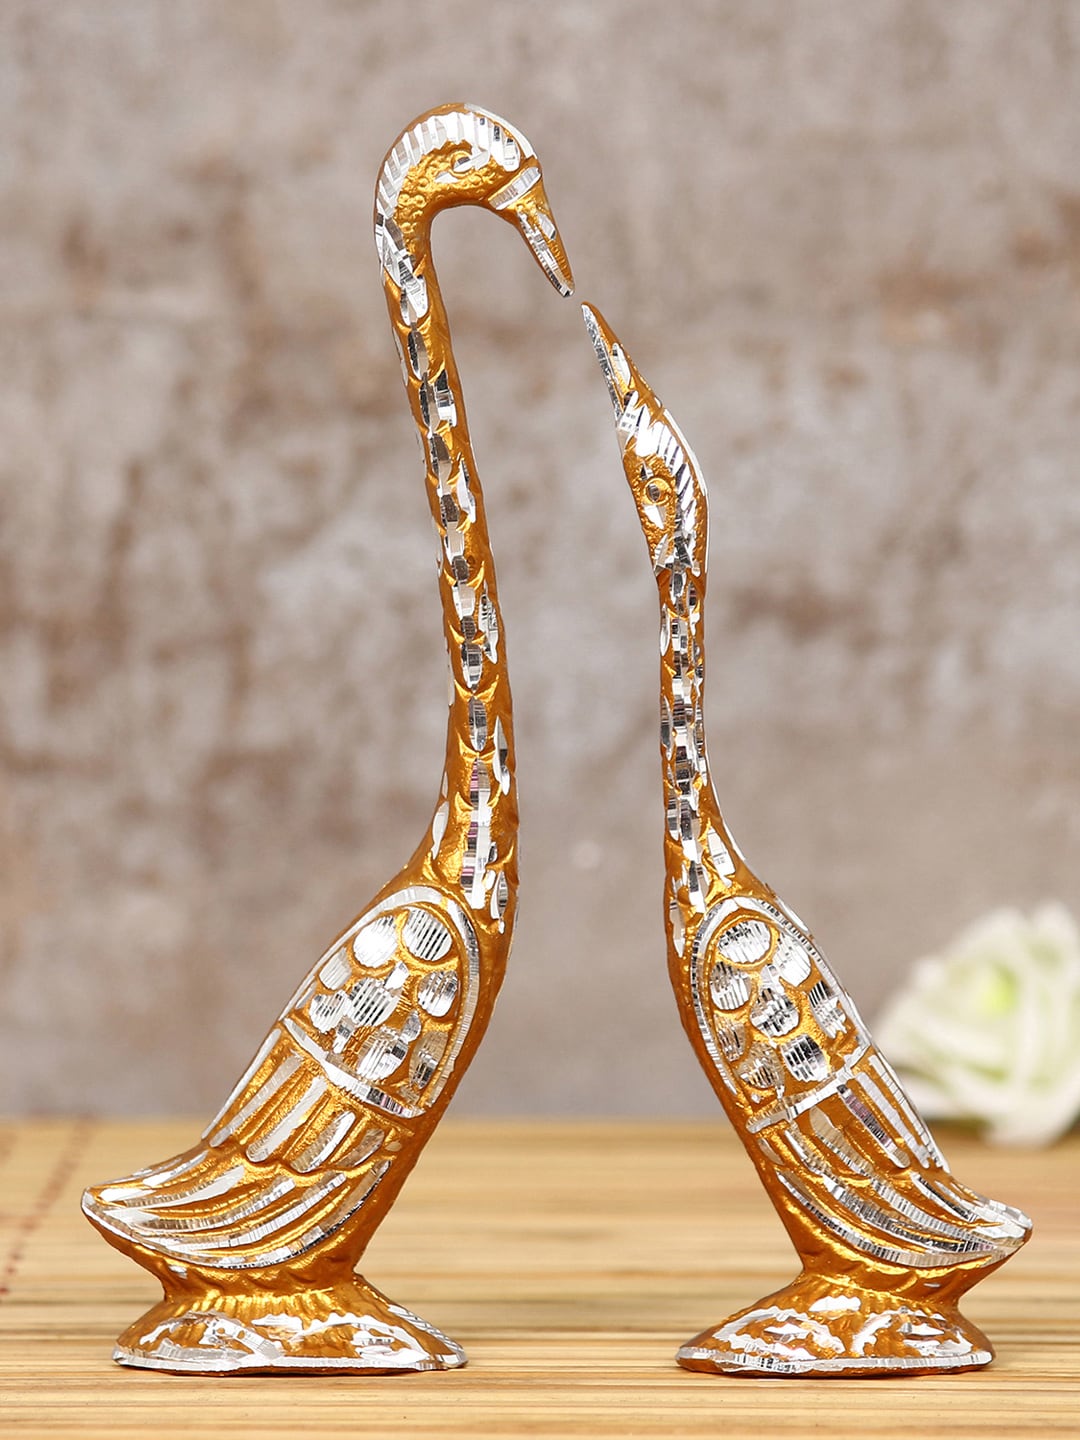 eCraftIndia Gold-Toned Cute Swan Love Birds Decorative Figurine Showpiece Price in India